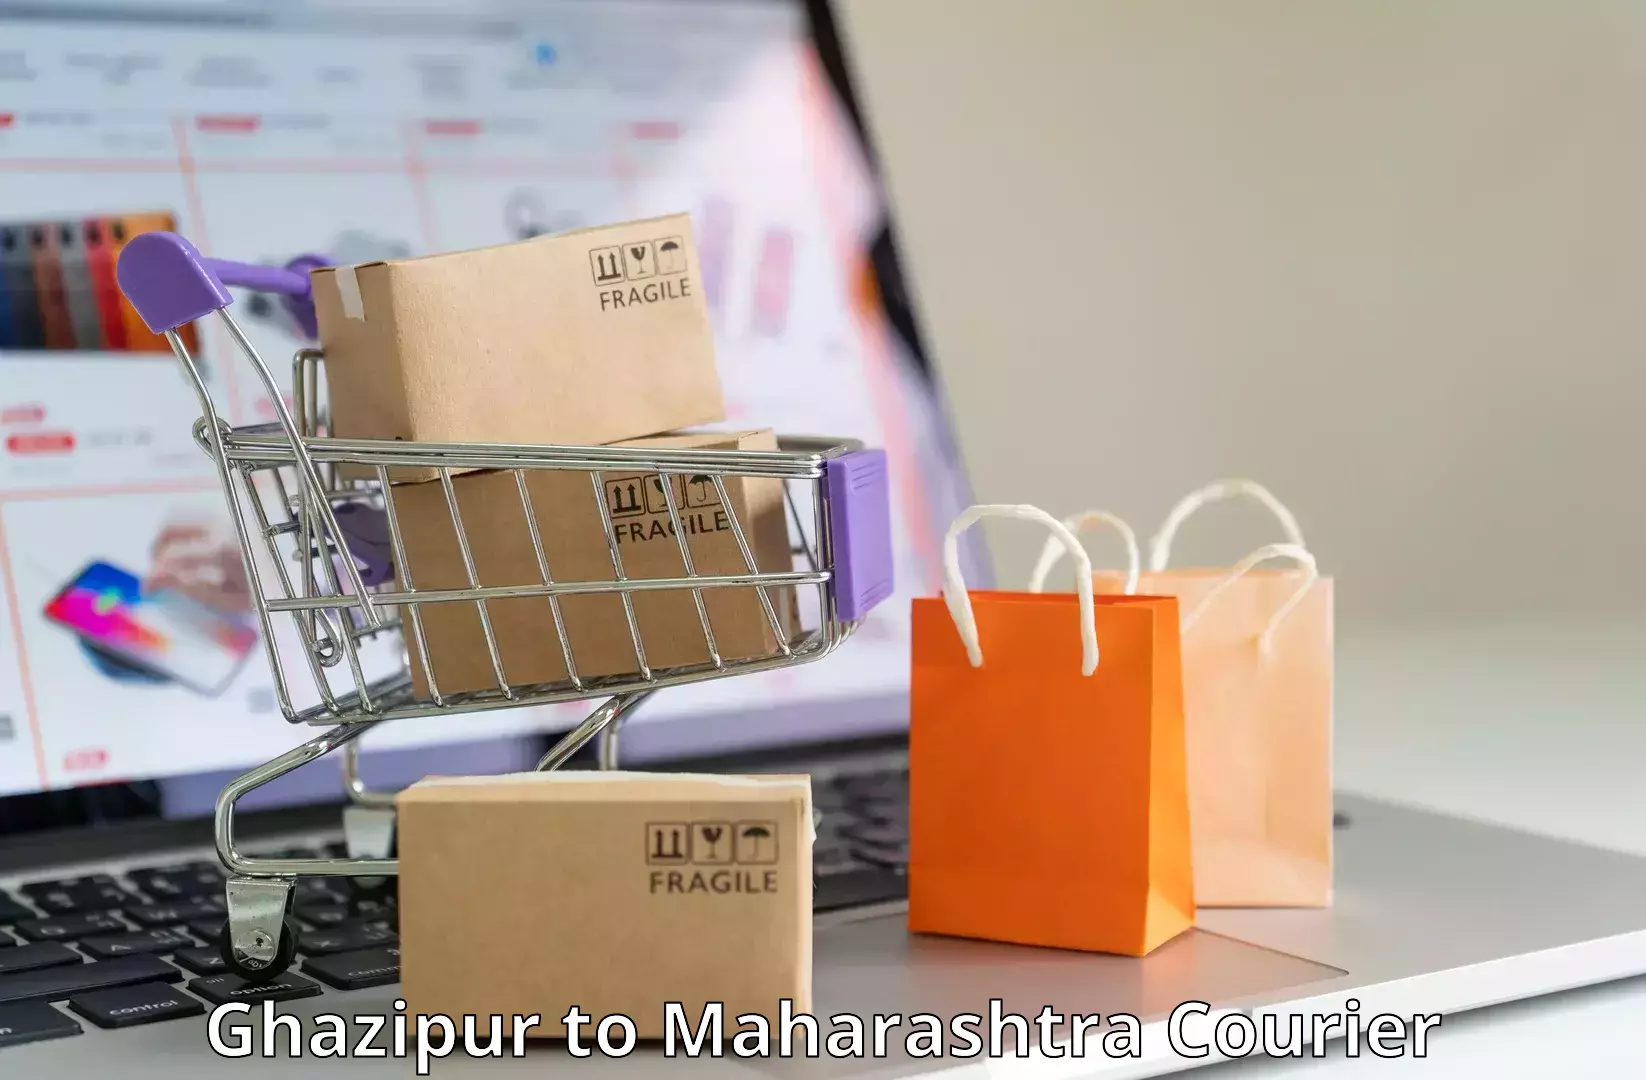 Online package tracking in Ghazipur to Kopargaon